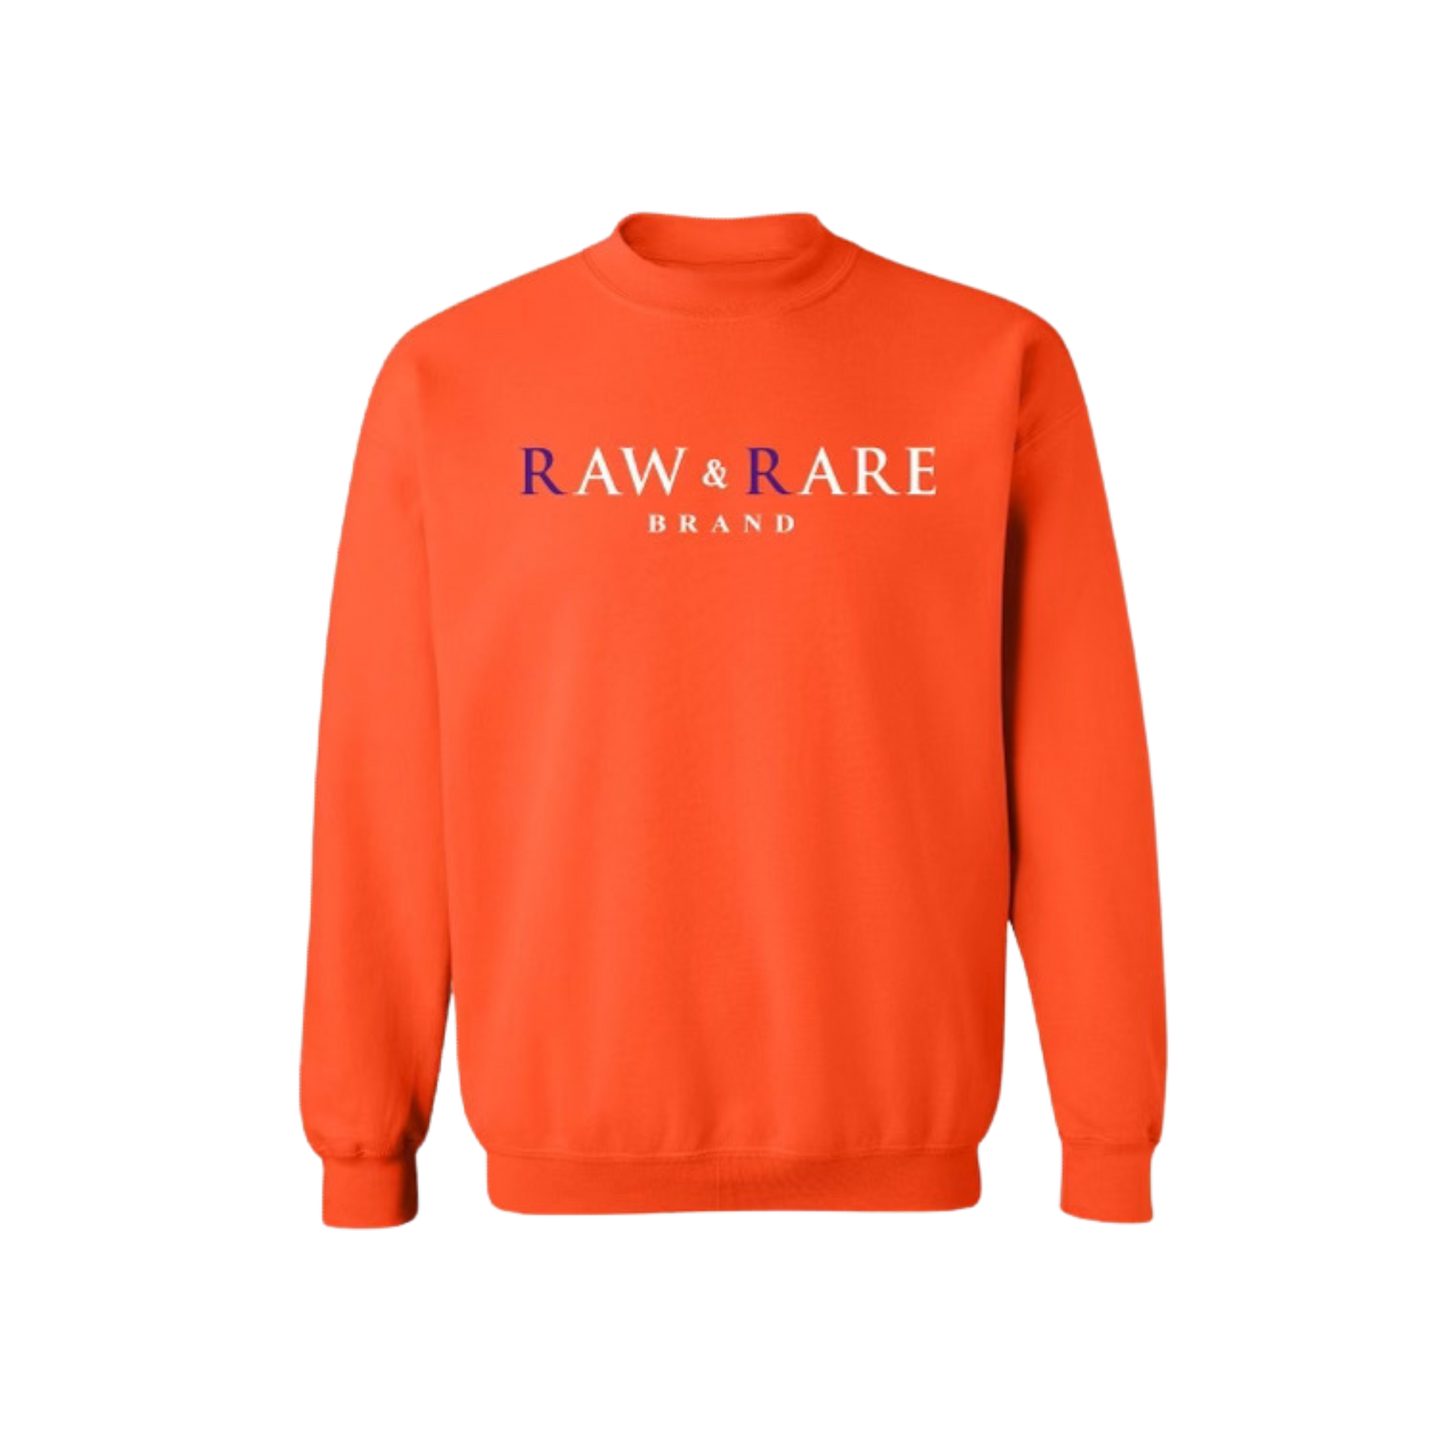 Raw & Rare Brand “ The Juice” Sweatshirt